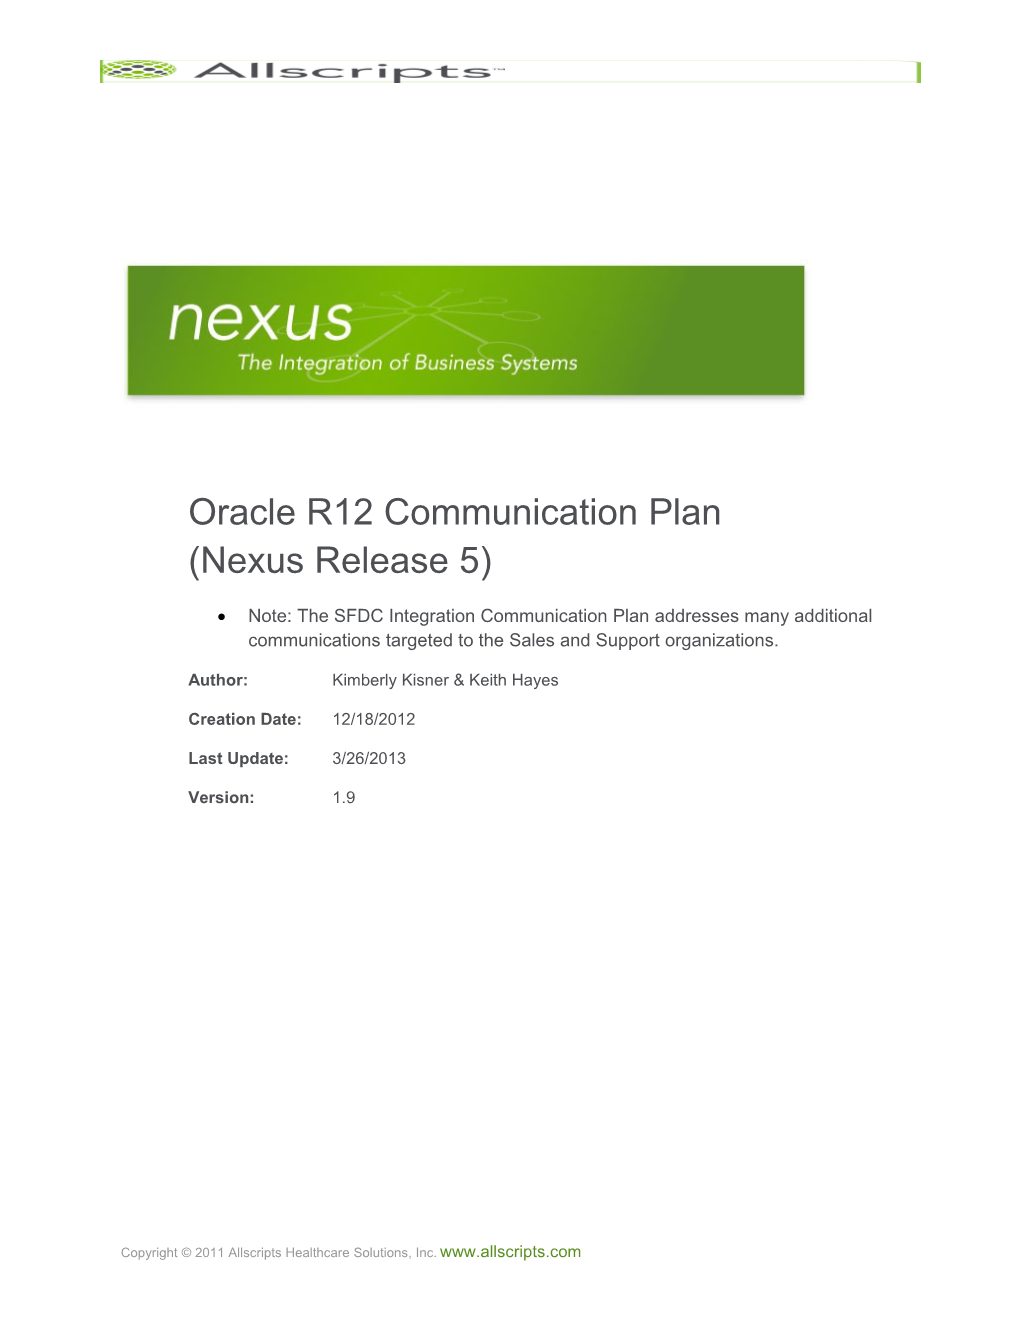 Oracle R12 Communication Plan (Nexus Release 5)